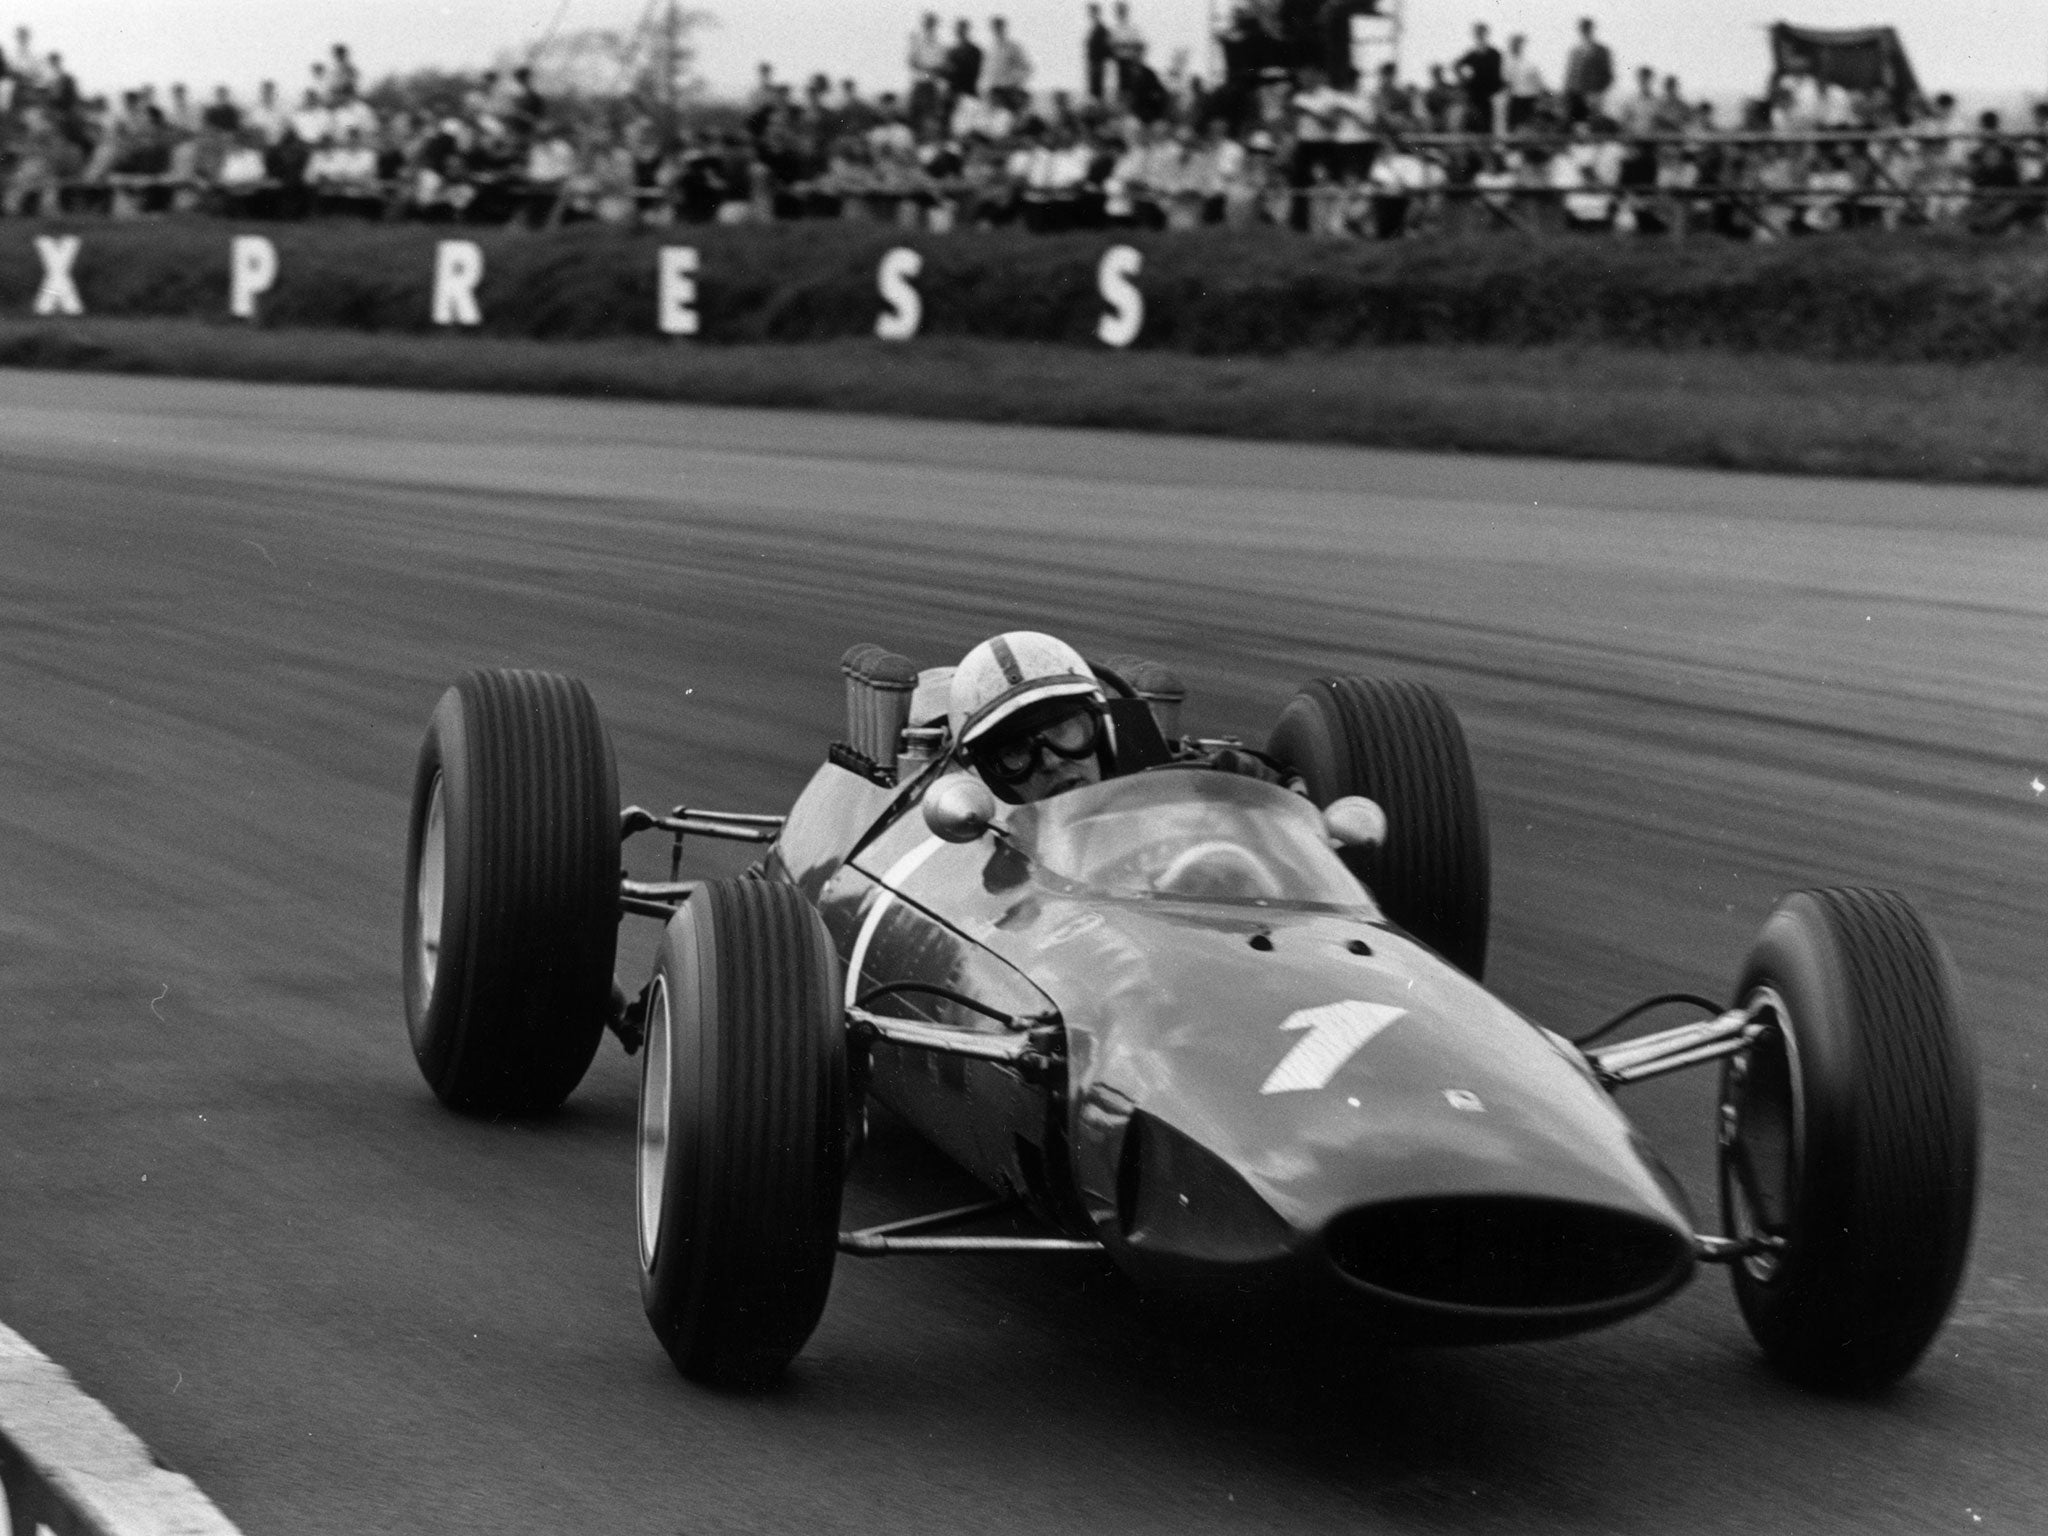 Surtees won the 1964 Formula One world championship with Ferrari